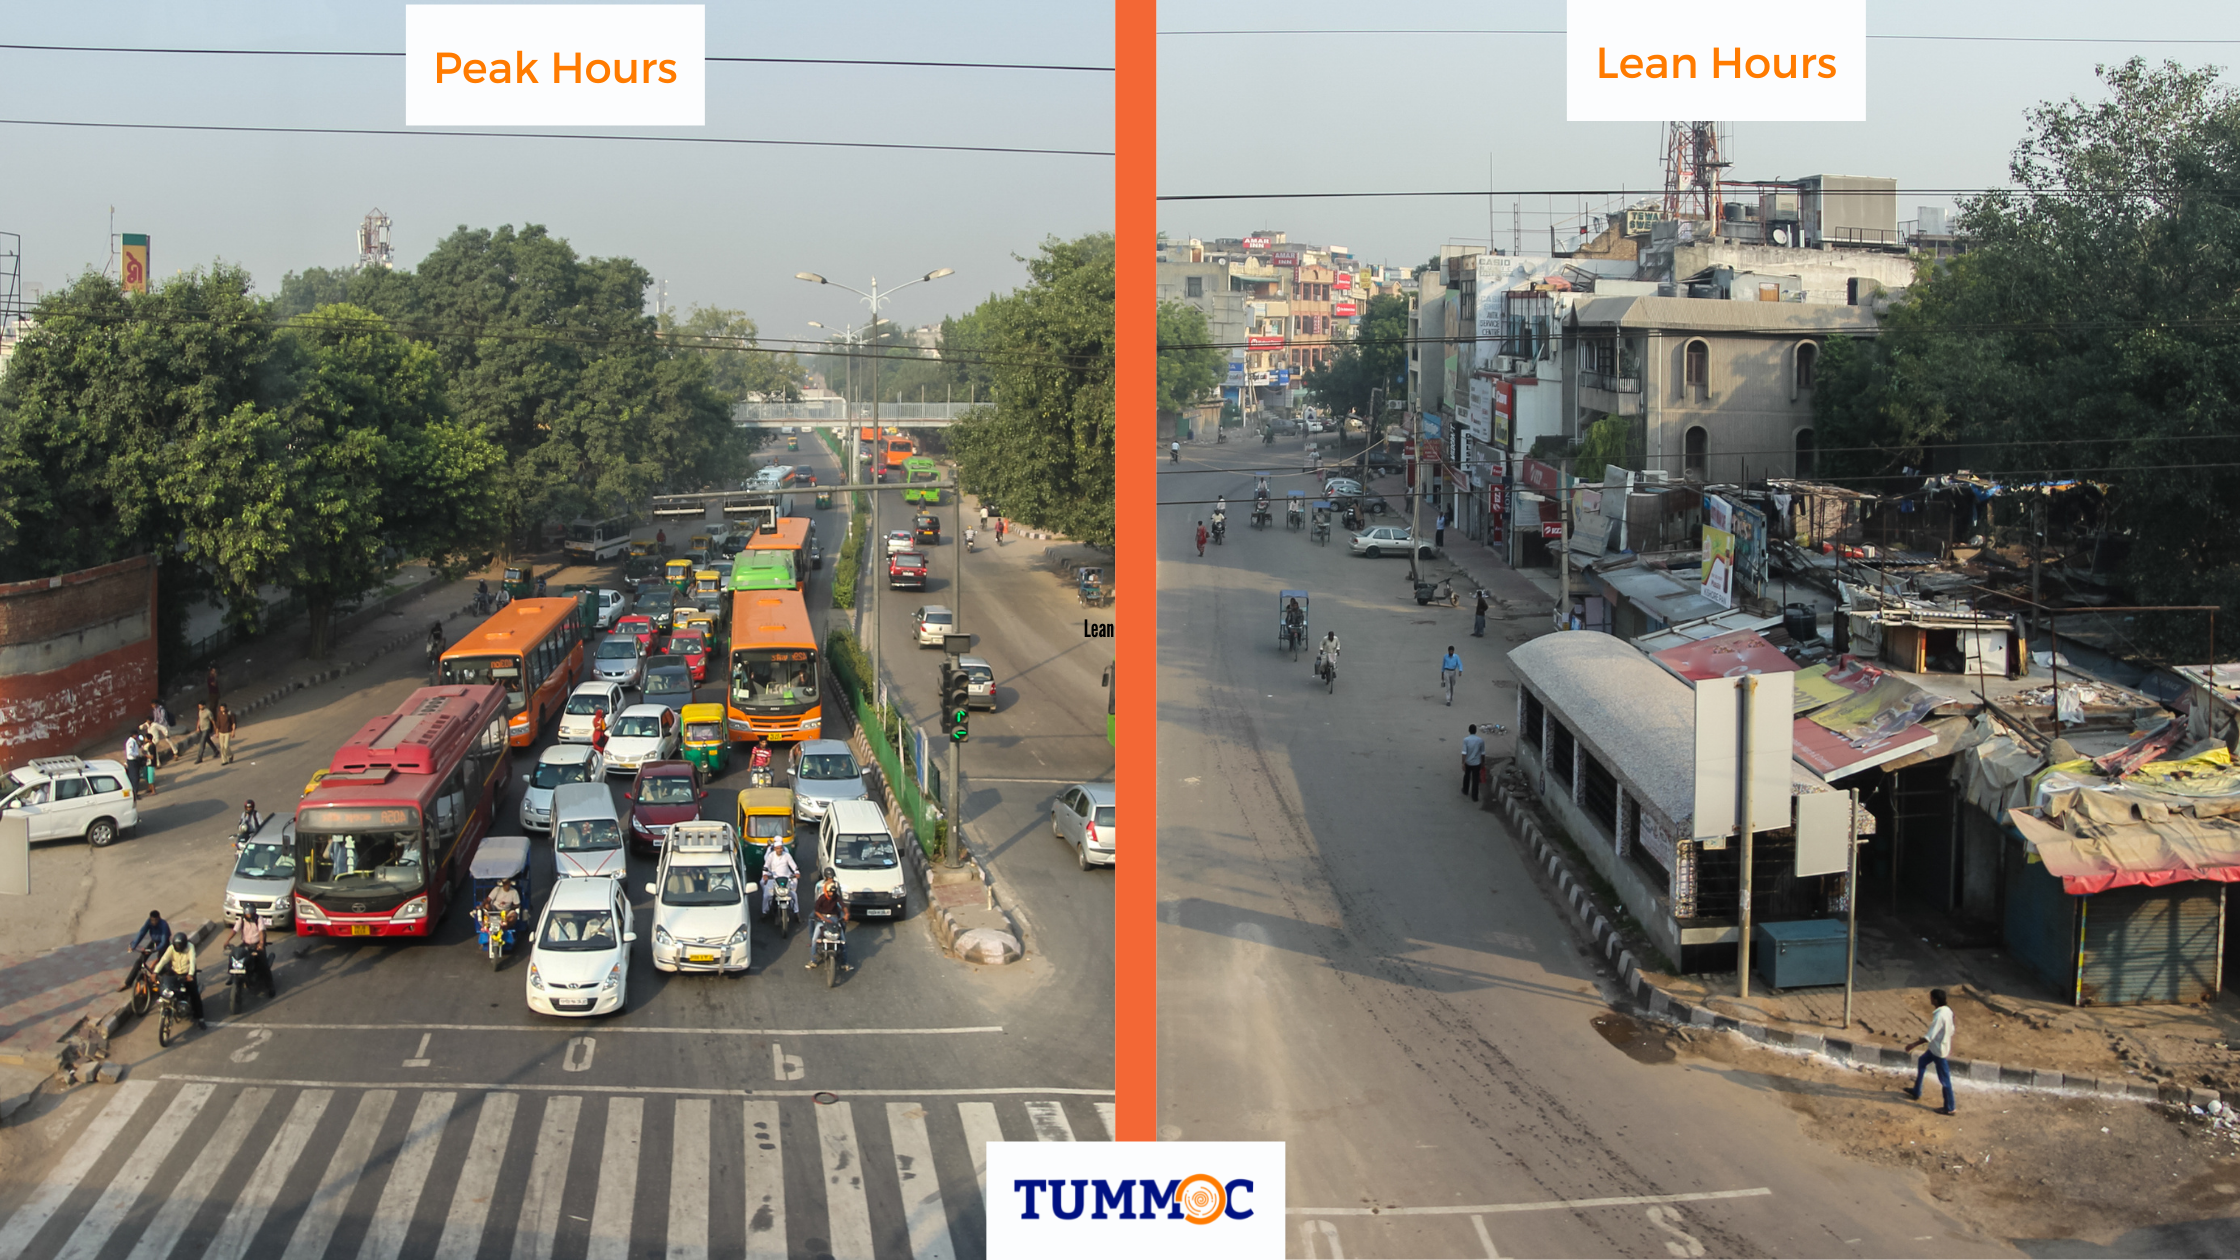 Commuting during peak hours vs lean hours Tummoc